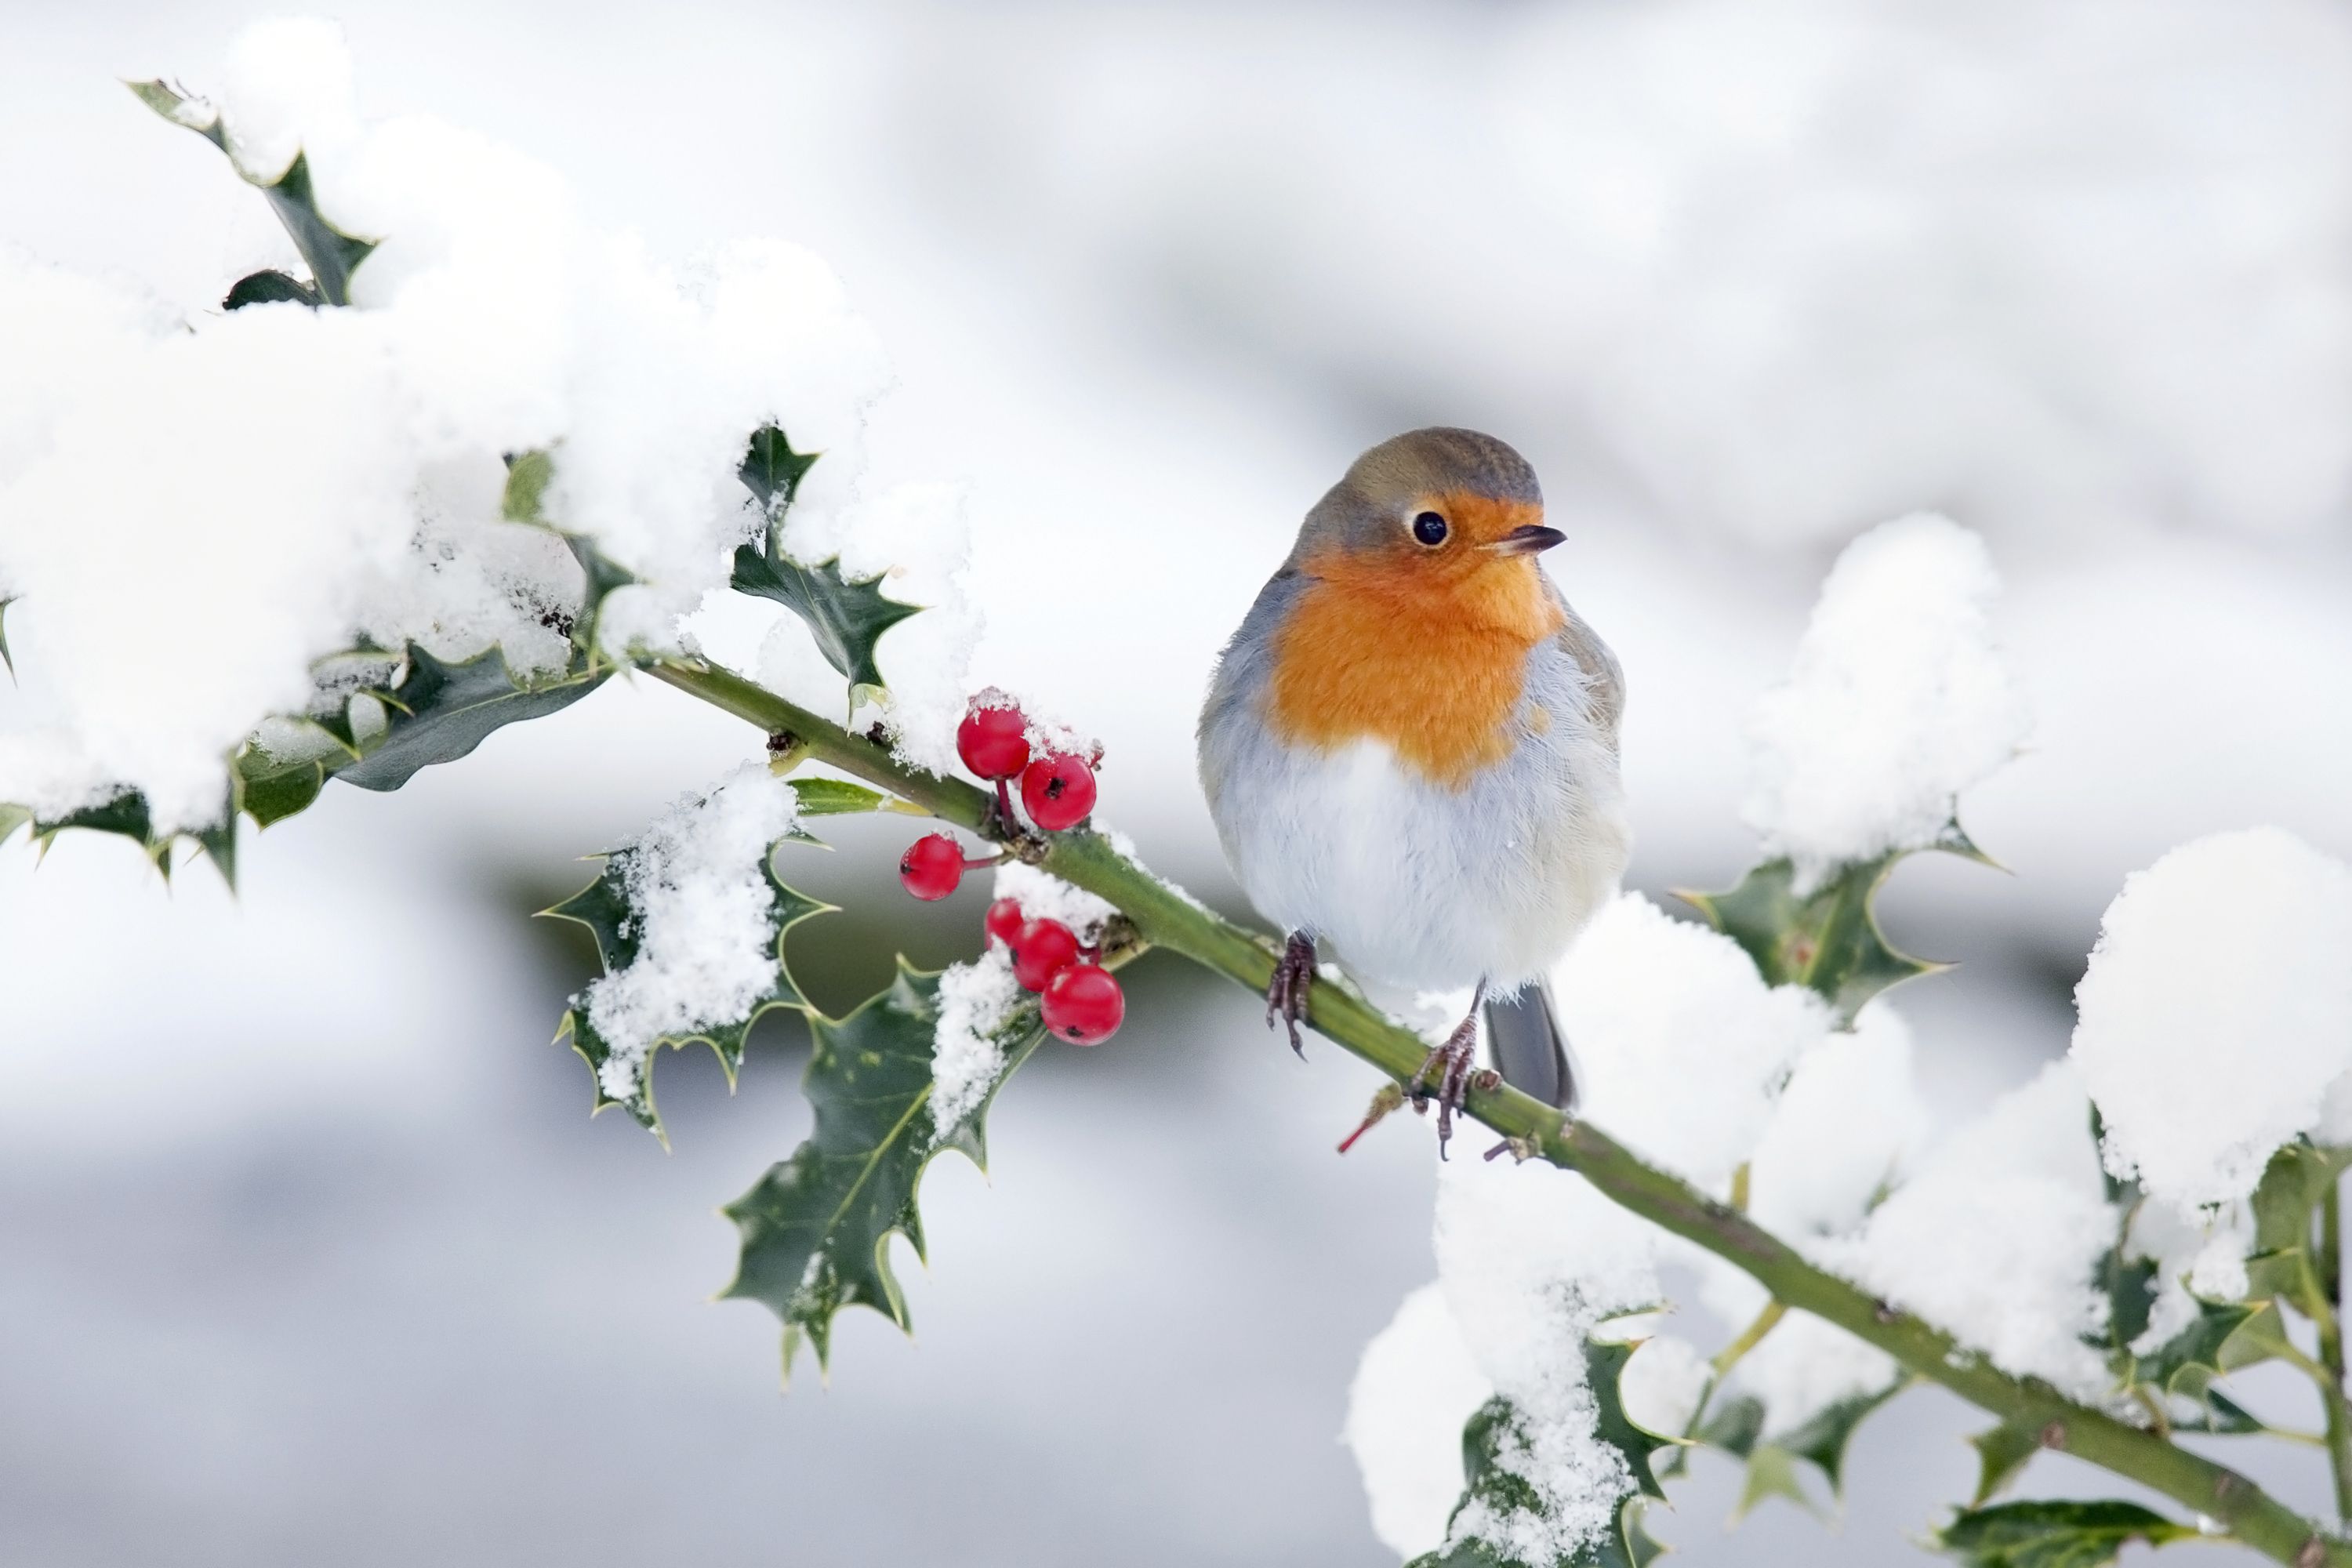 Native bird on a snowy holly branch